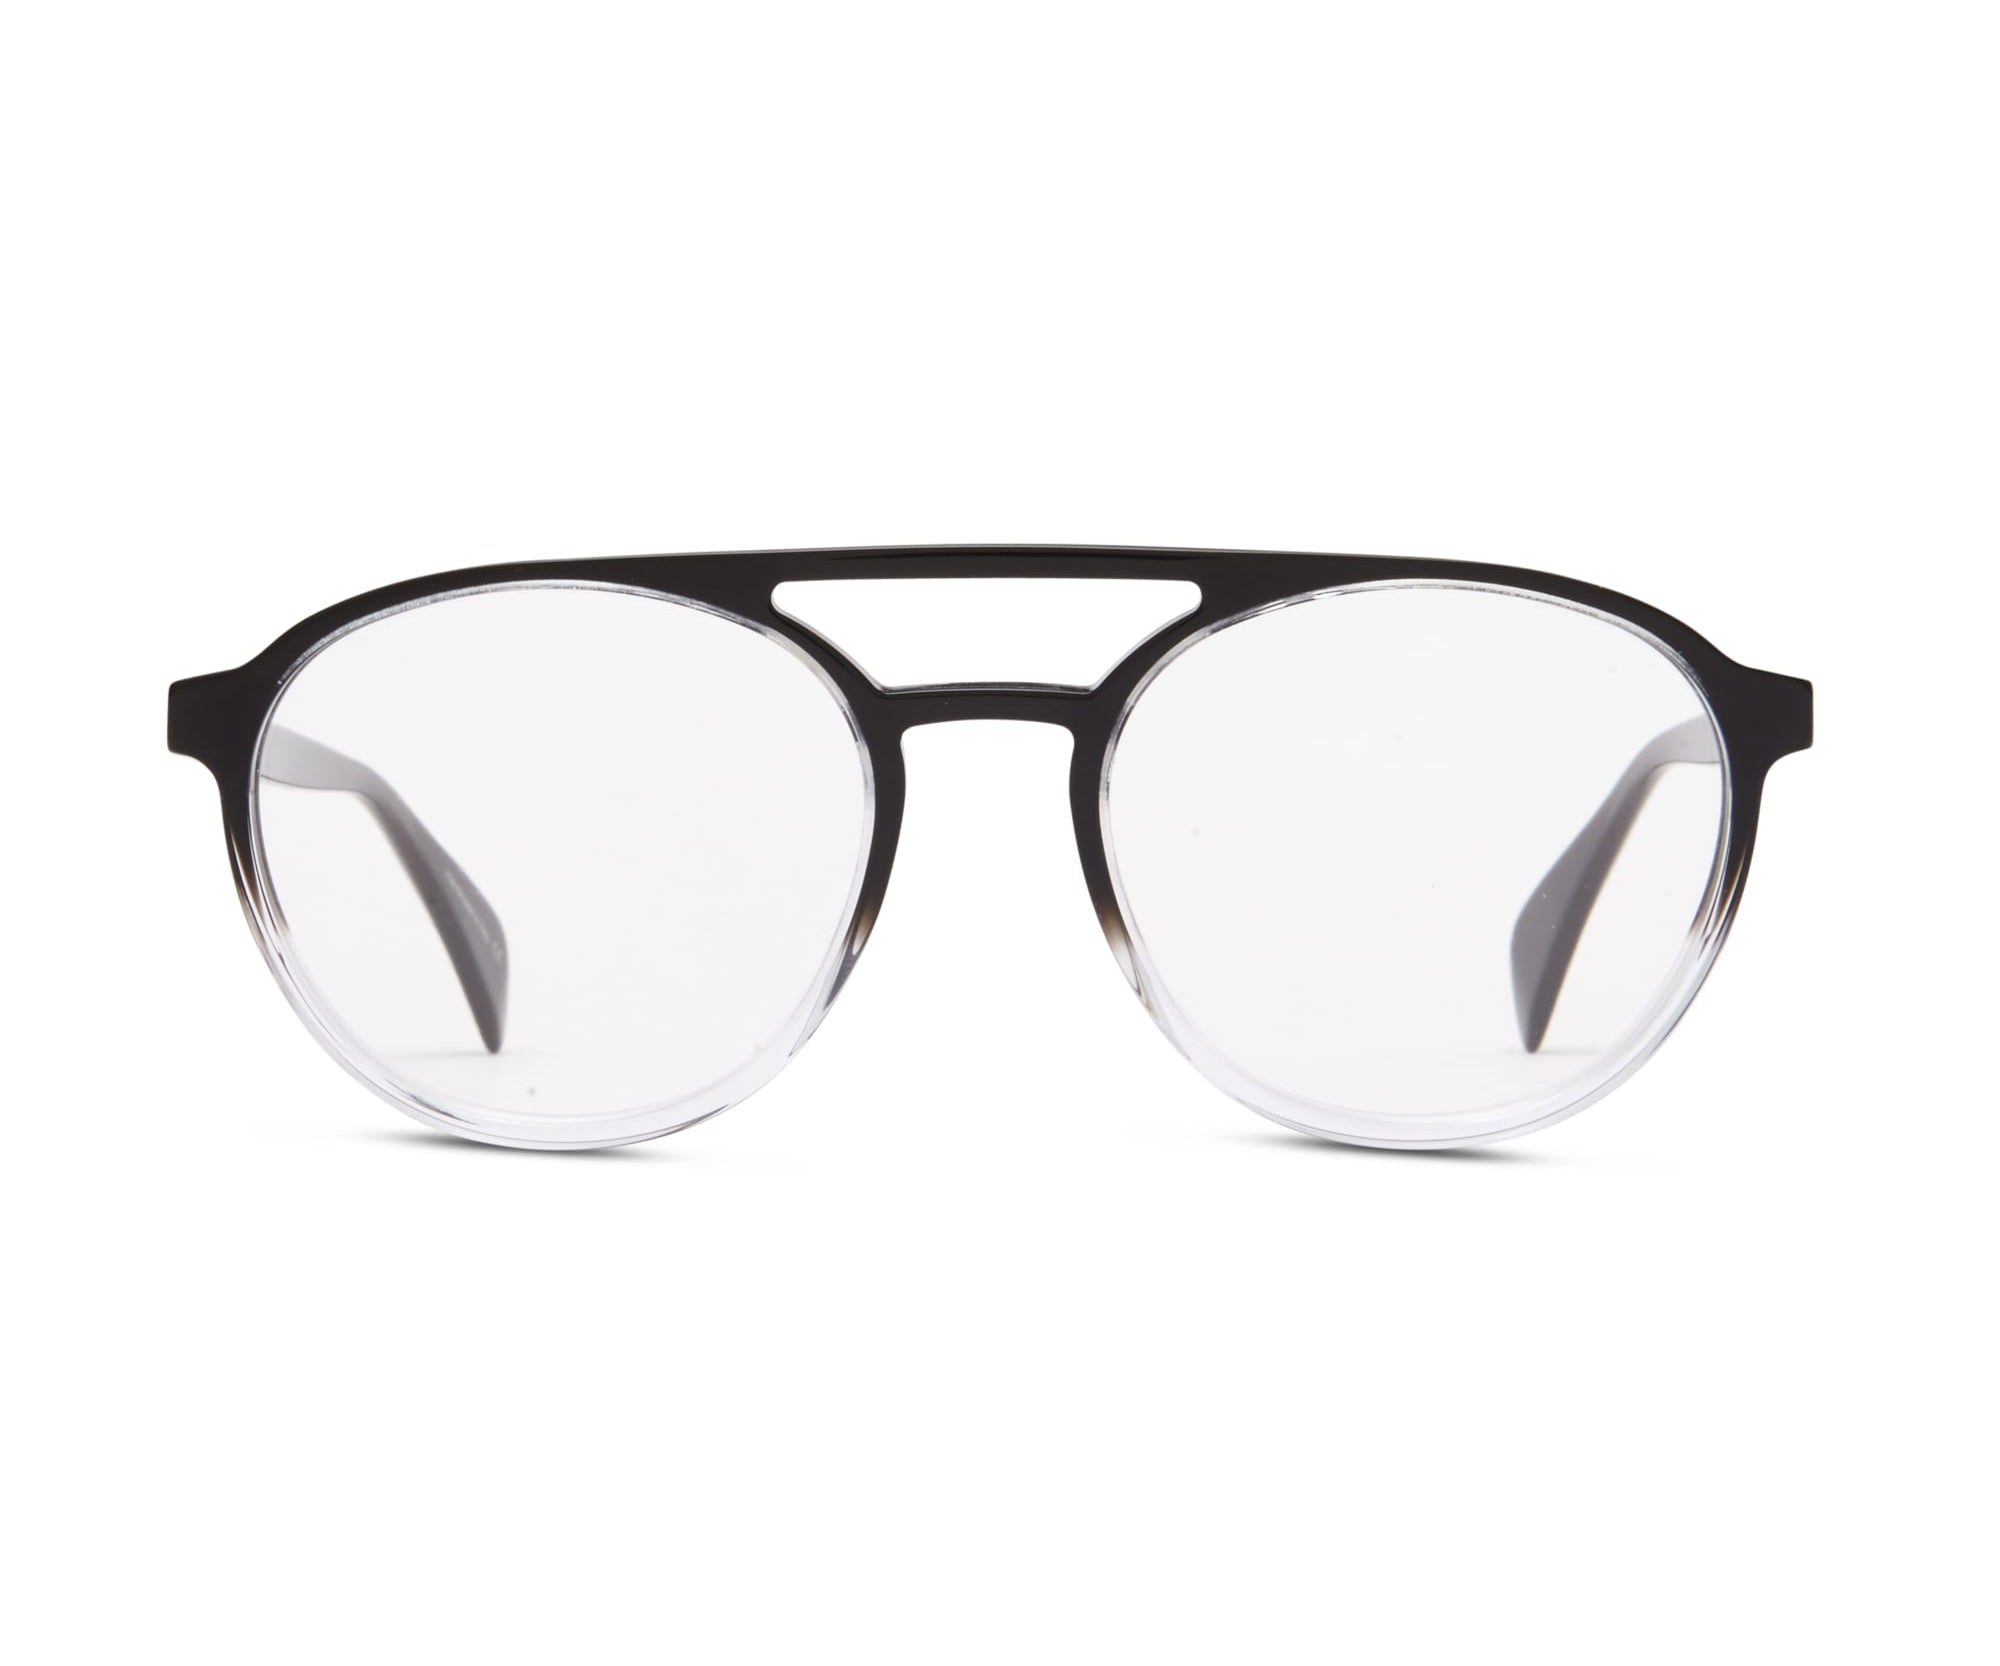 Moko Sunglasses with Black Crystal acetate frame